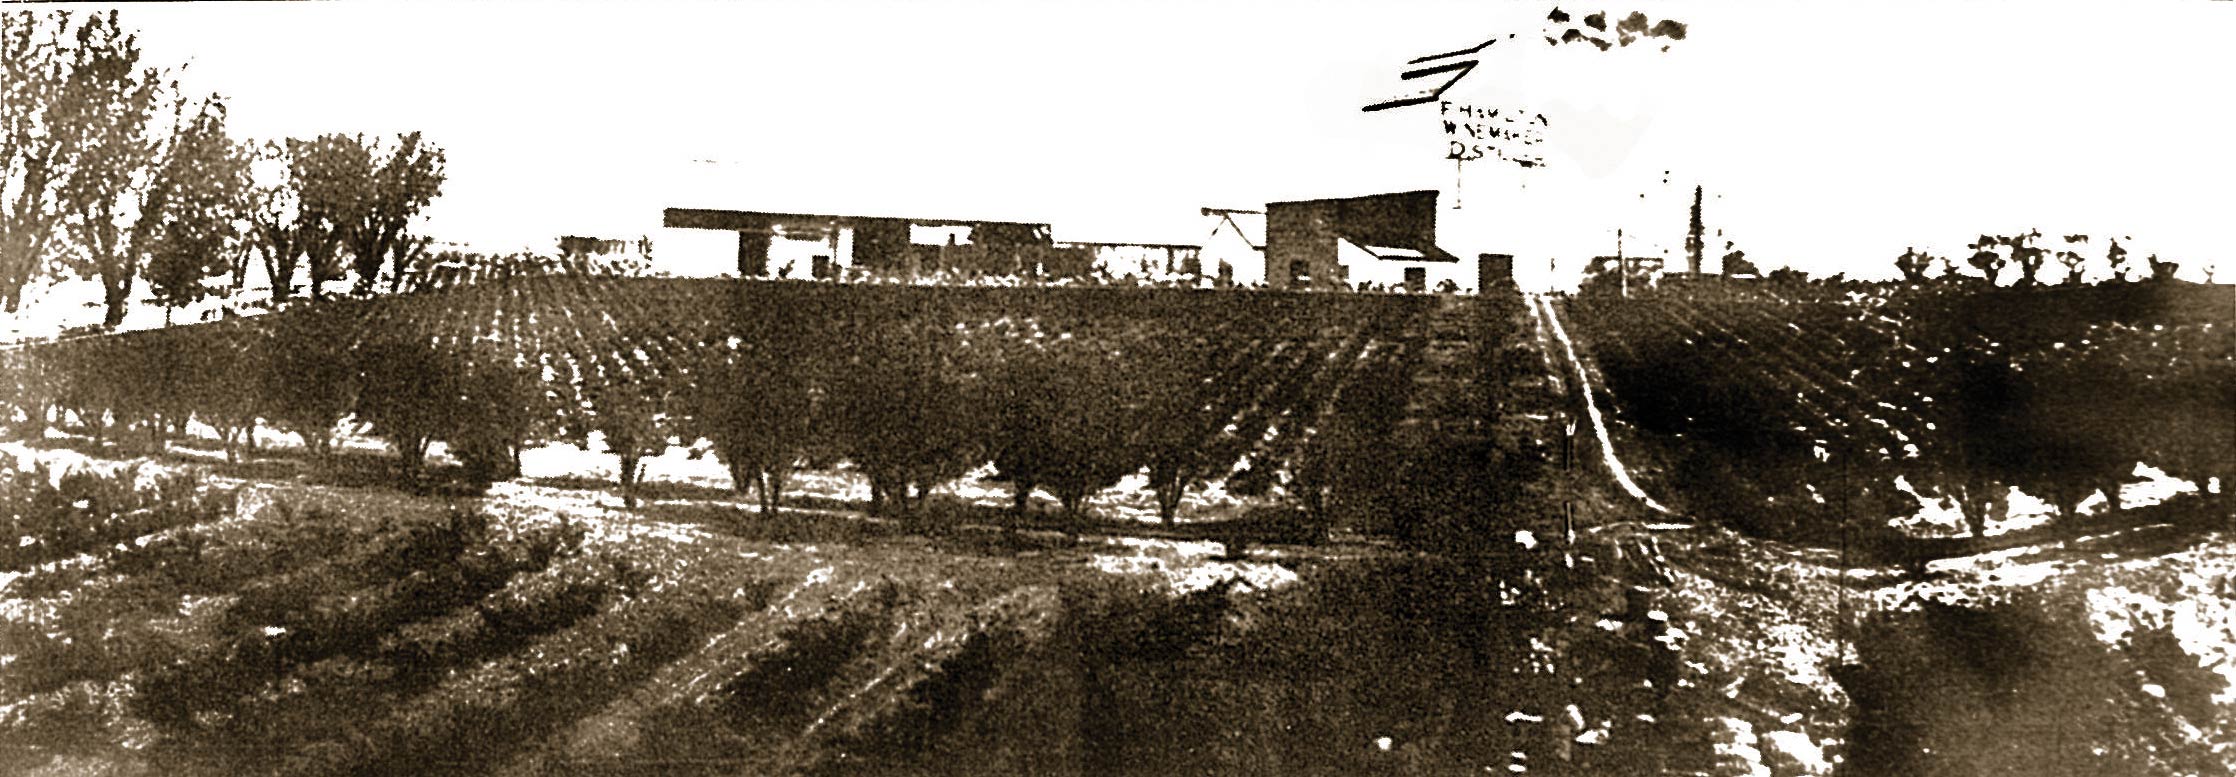 Distillery and vineyard panorama